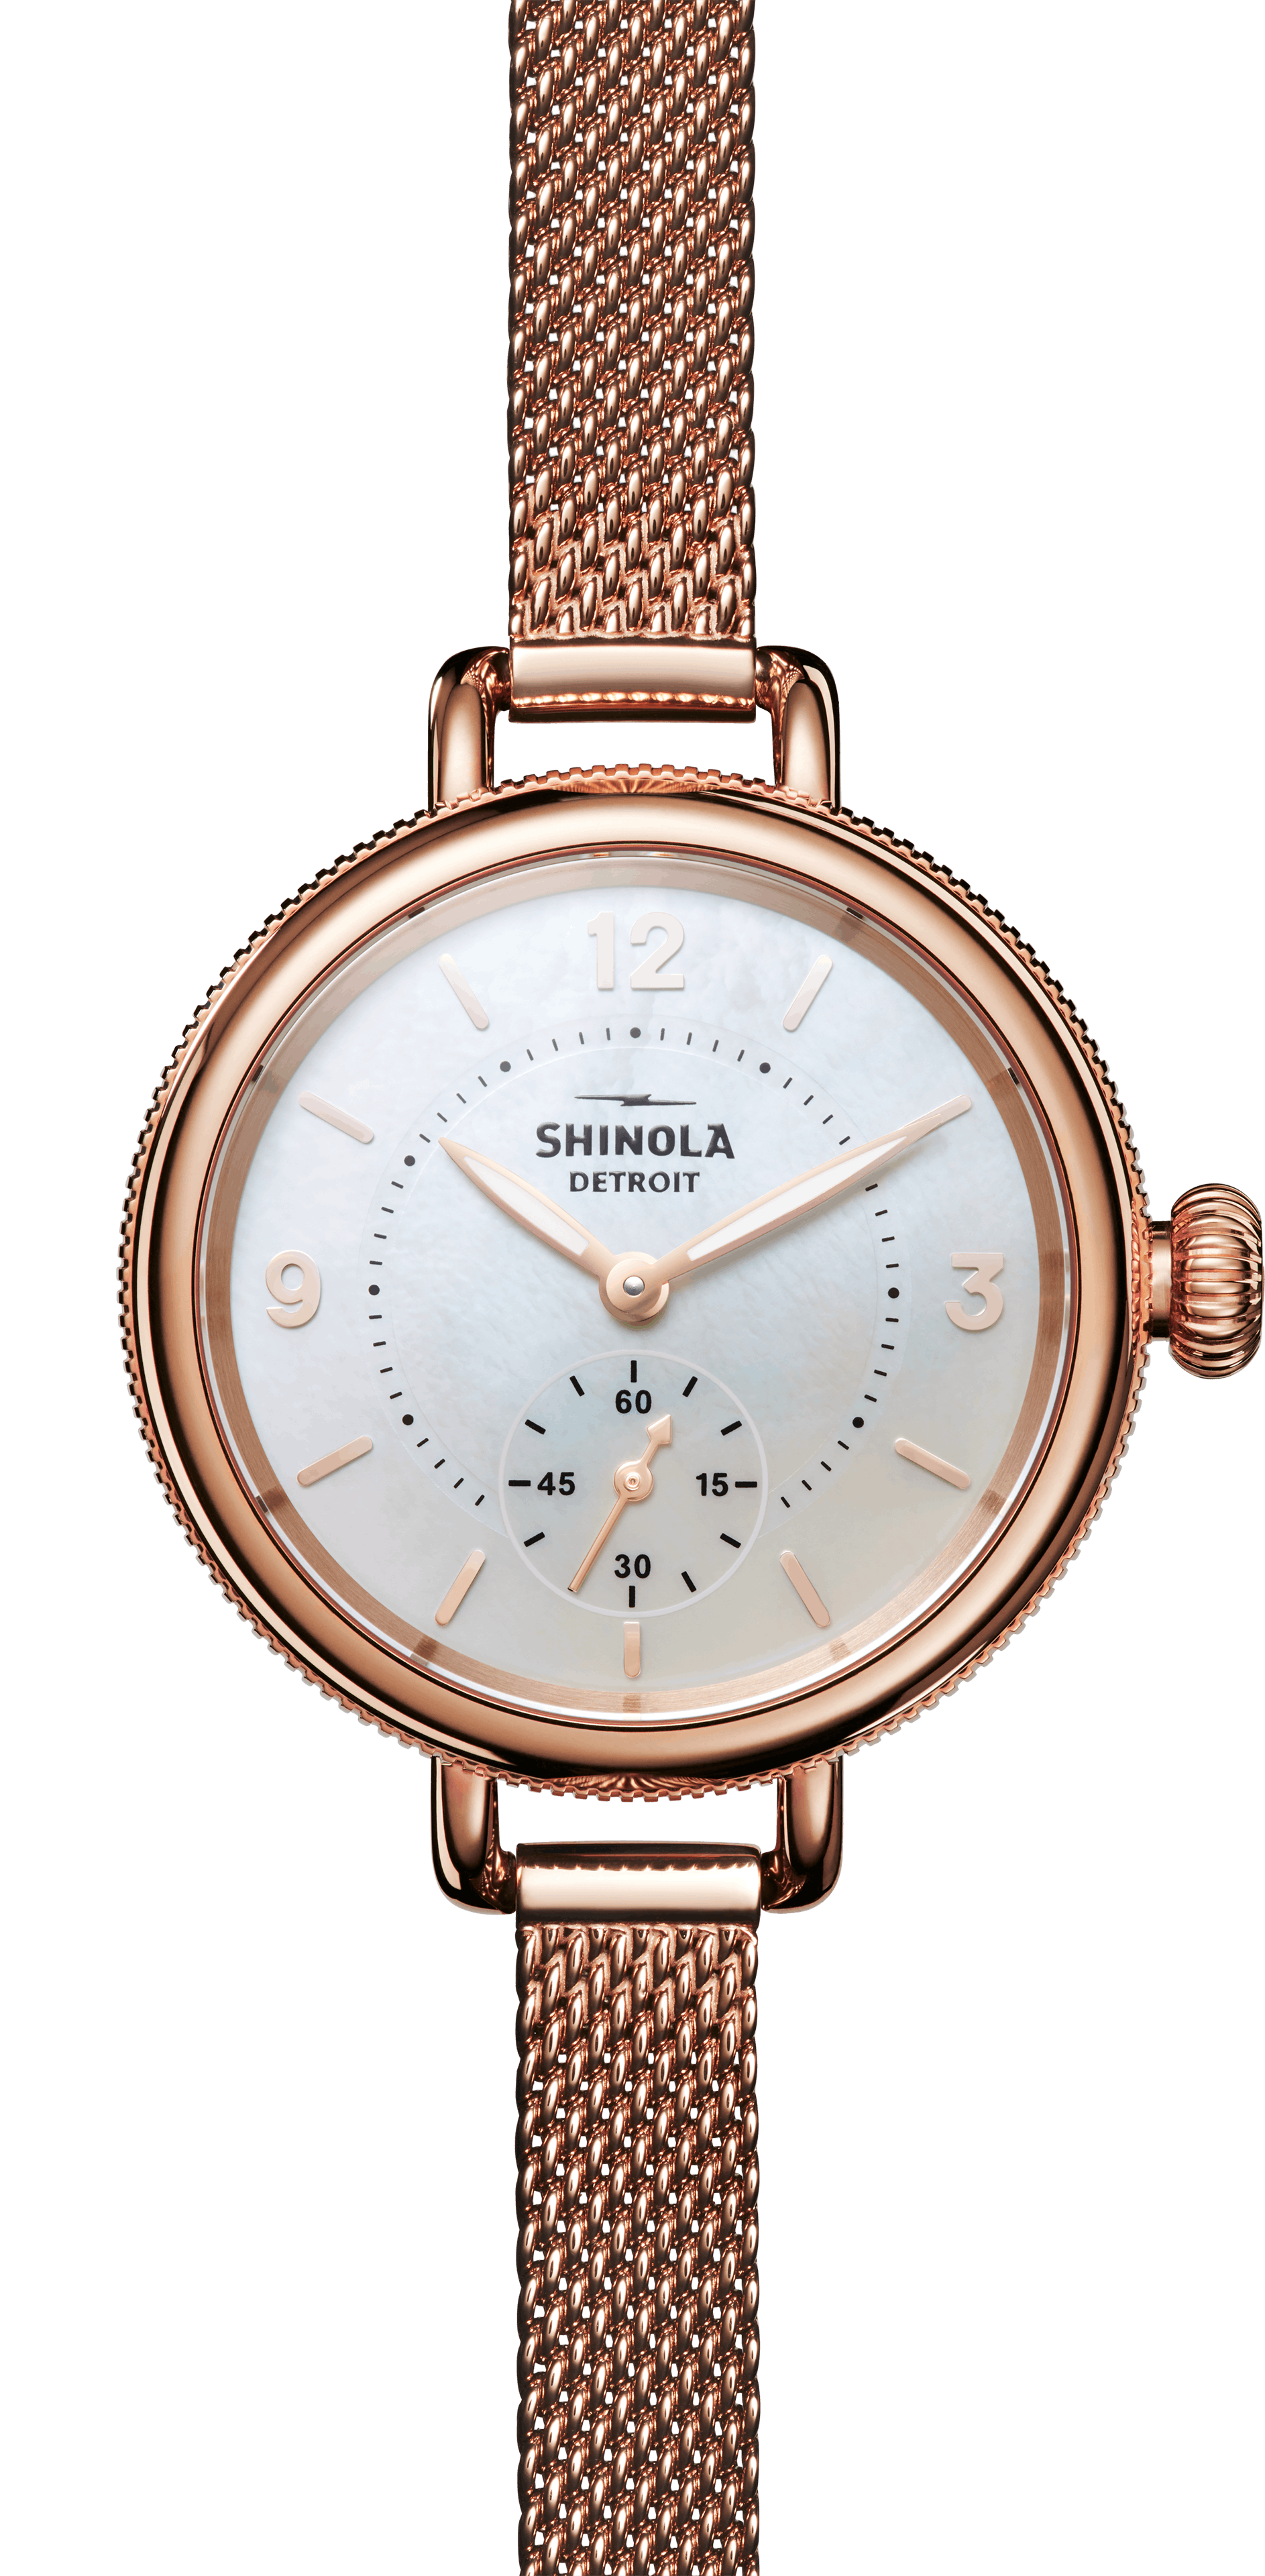 Detroit Watch Company M1 Chronograph Watch | aBlogtoWatch